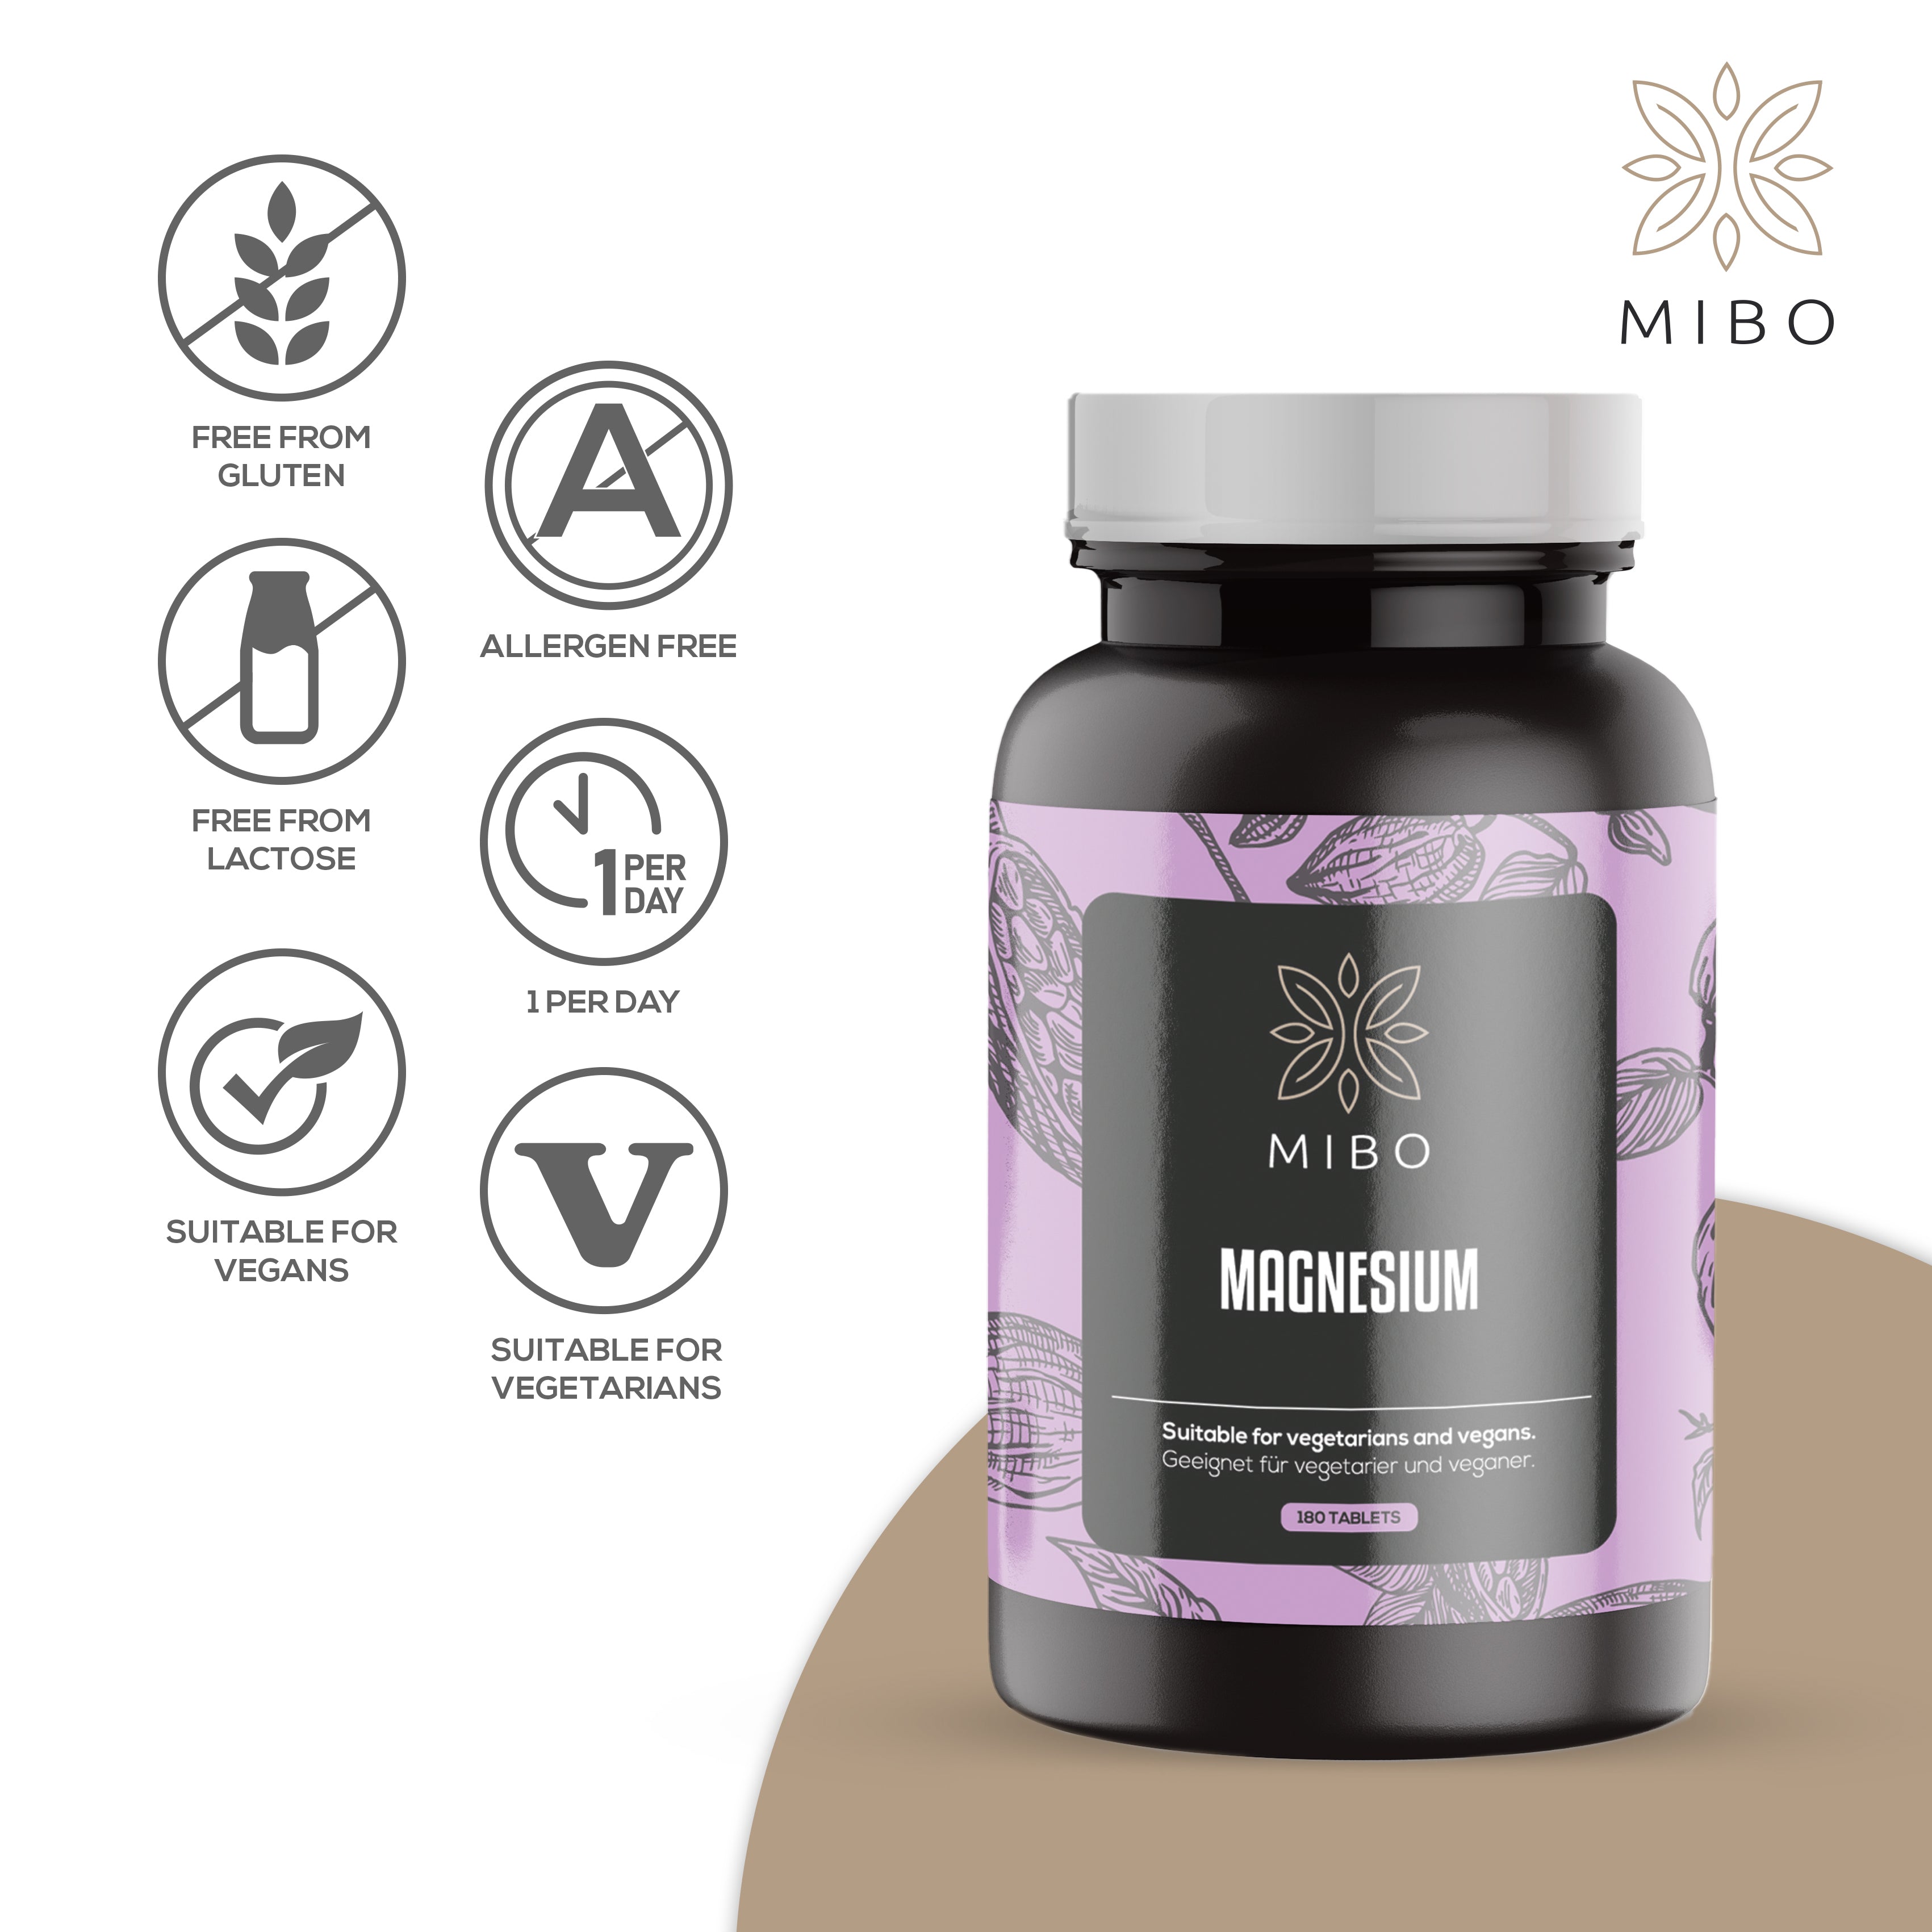 MiBo Bones and Heart Immune Support - Premium Immune Booster Supplement with Vitamin K2 MK 7, Magnesium and MiBo Bone Support Supplement - Made in The UK by MiBo